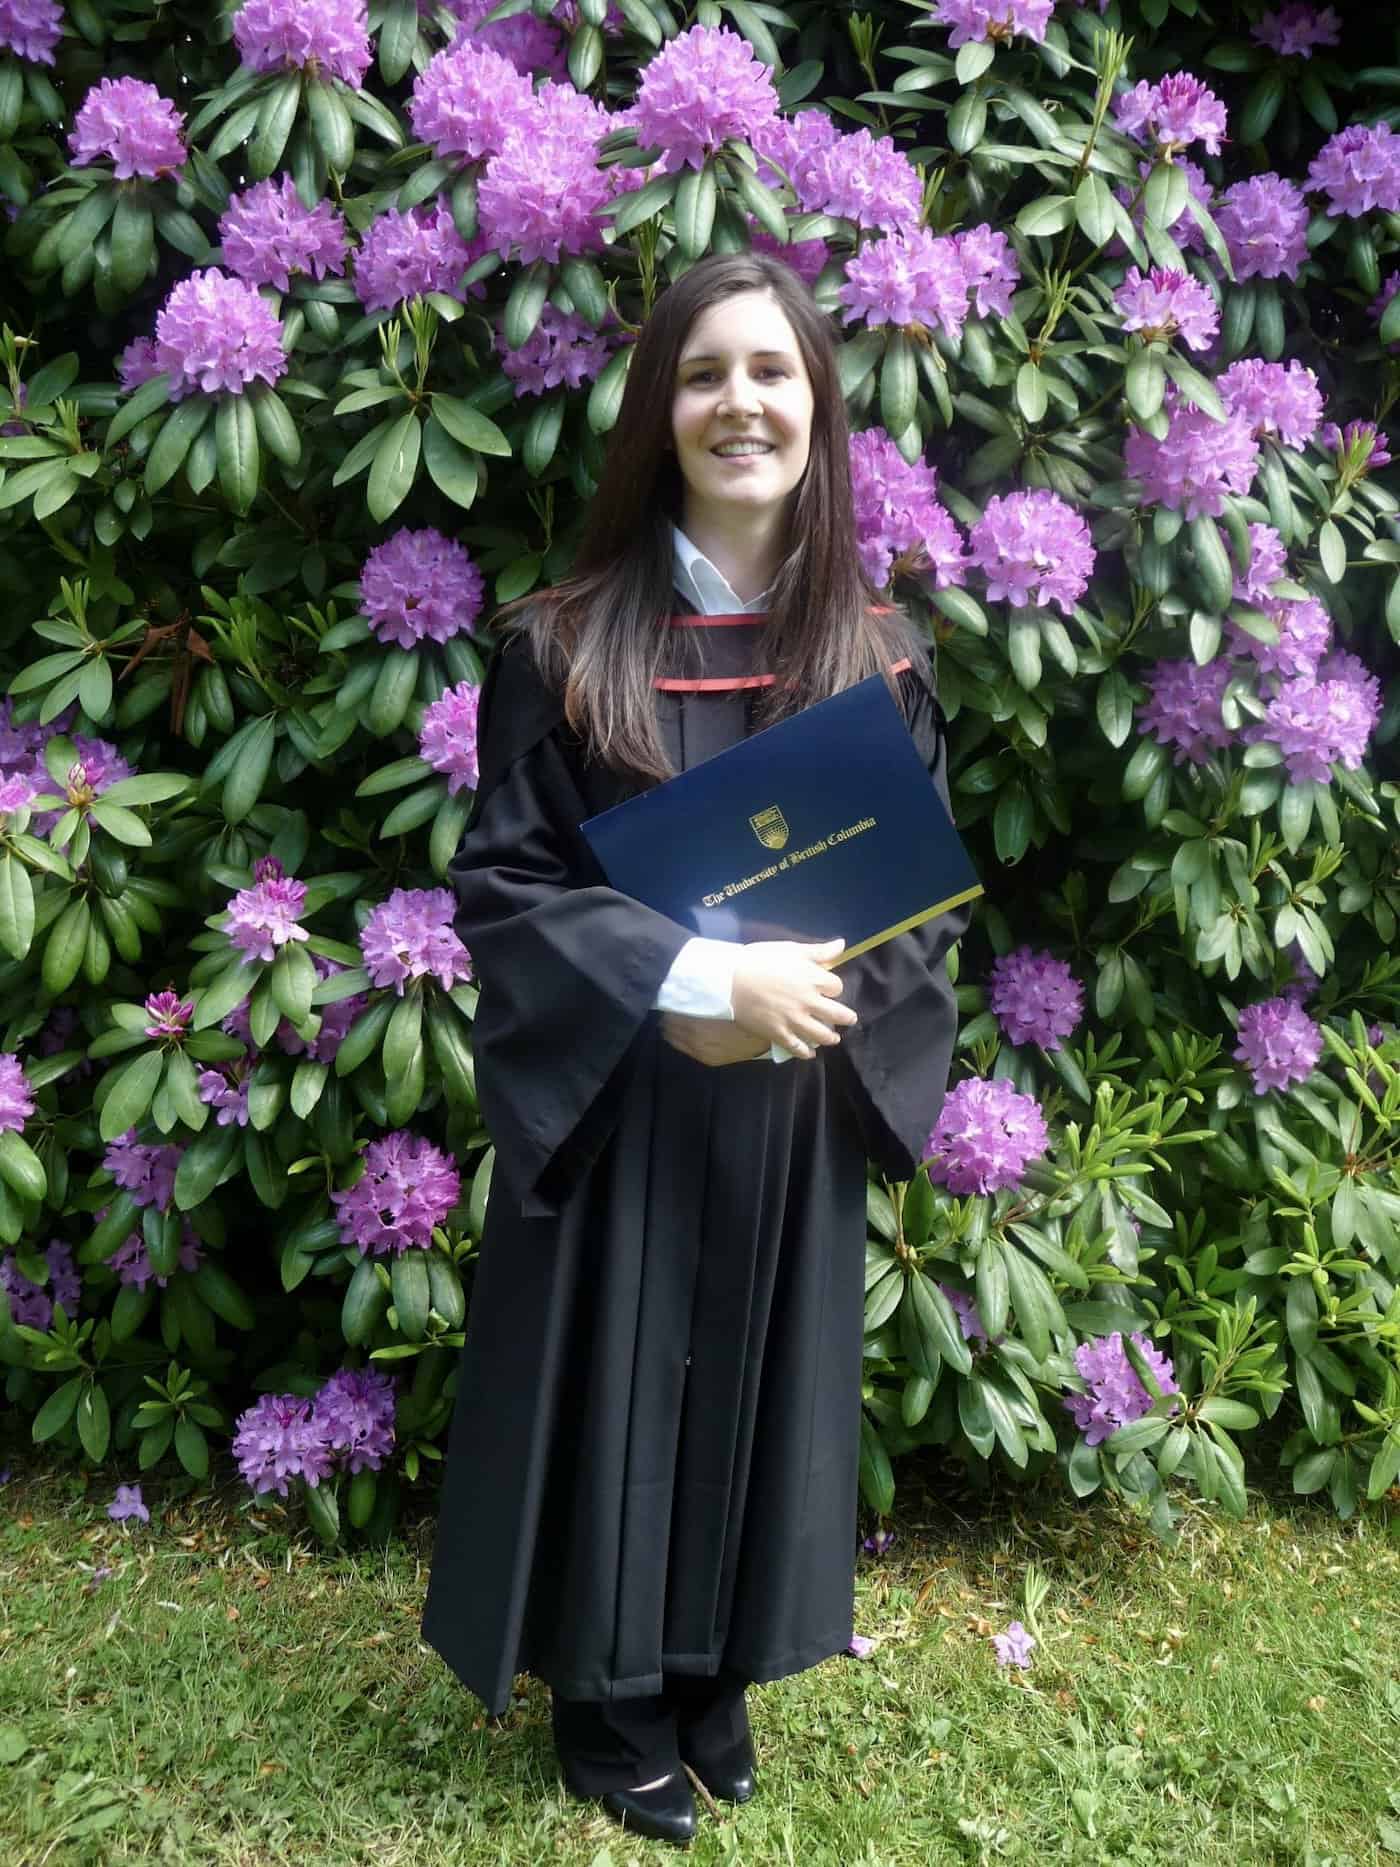 Mary jane duford - university graduation ubc engineering school